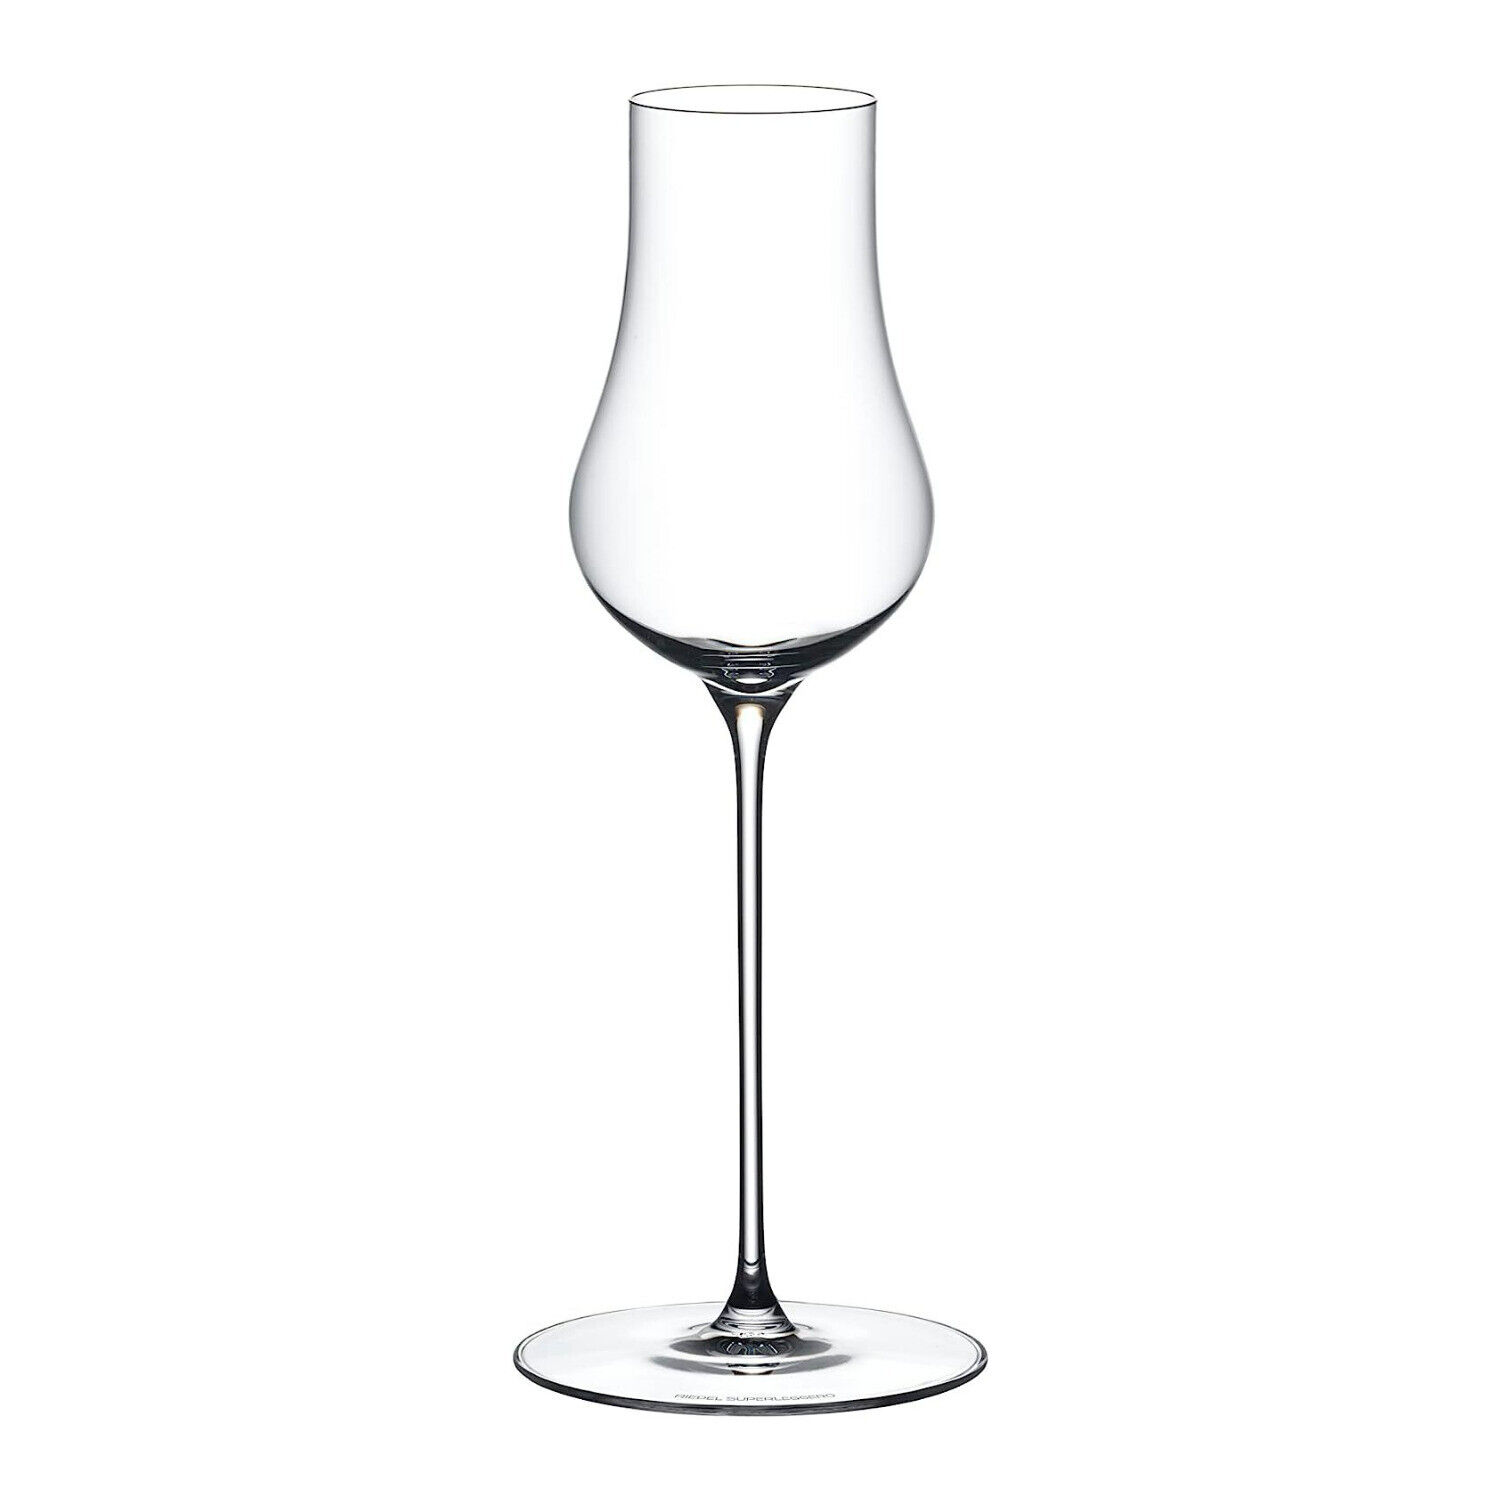 Riedel Supperleggero Spirits Crystal Wine Glass, Machine-Made